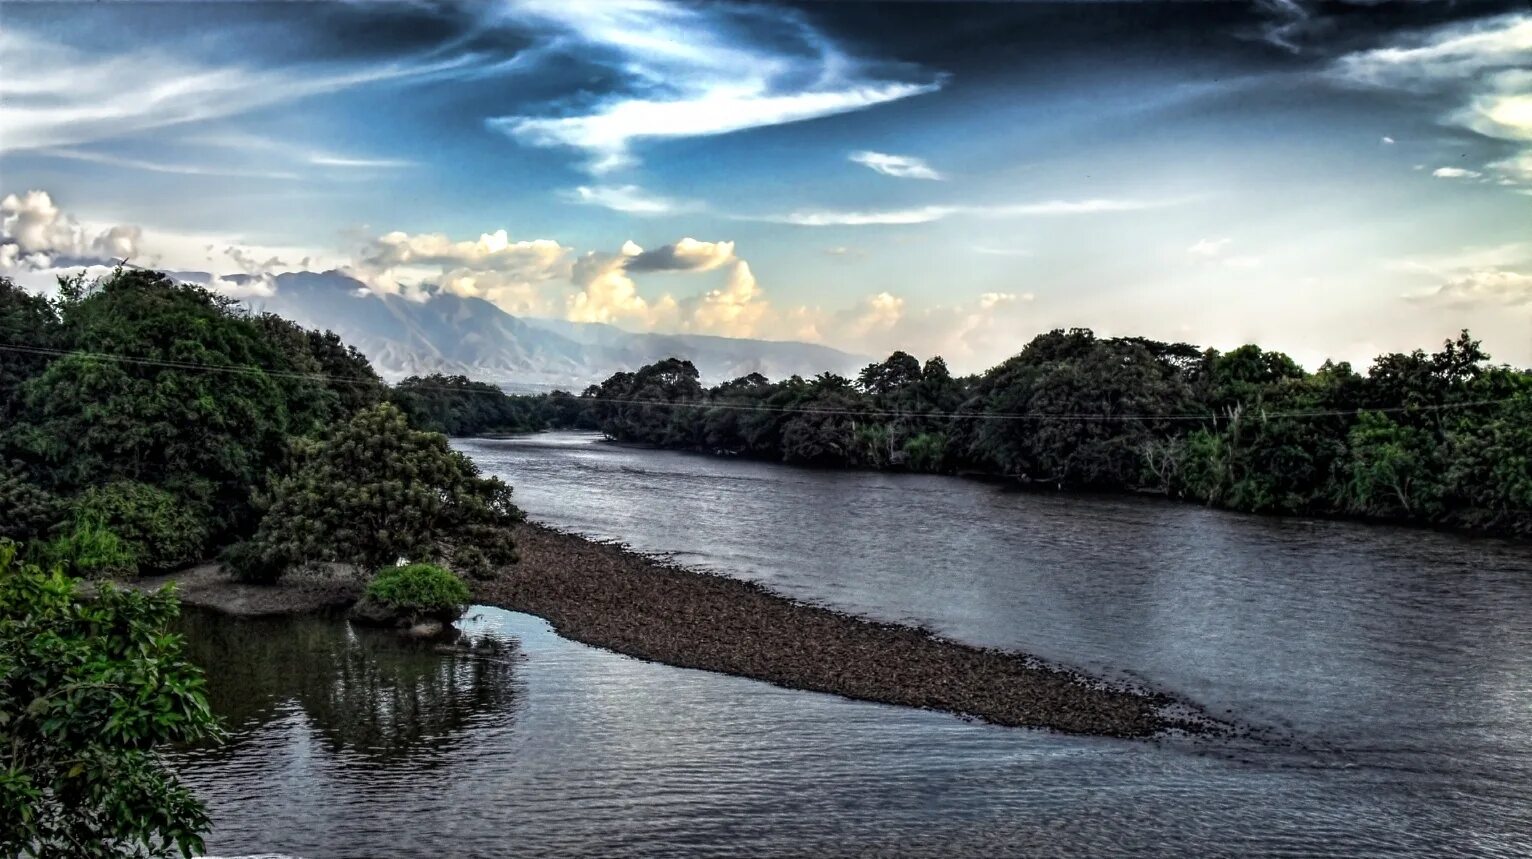 Река магдалена. Река Магдалена в Колумбии. Долина реки Магдалена Колумбия. Река Магдалена фото.